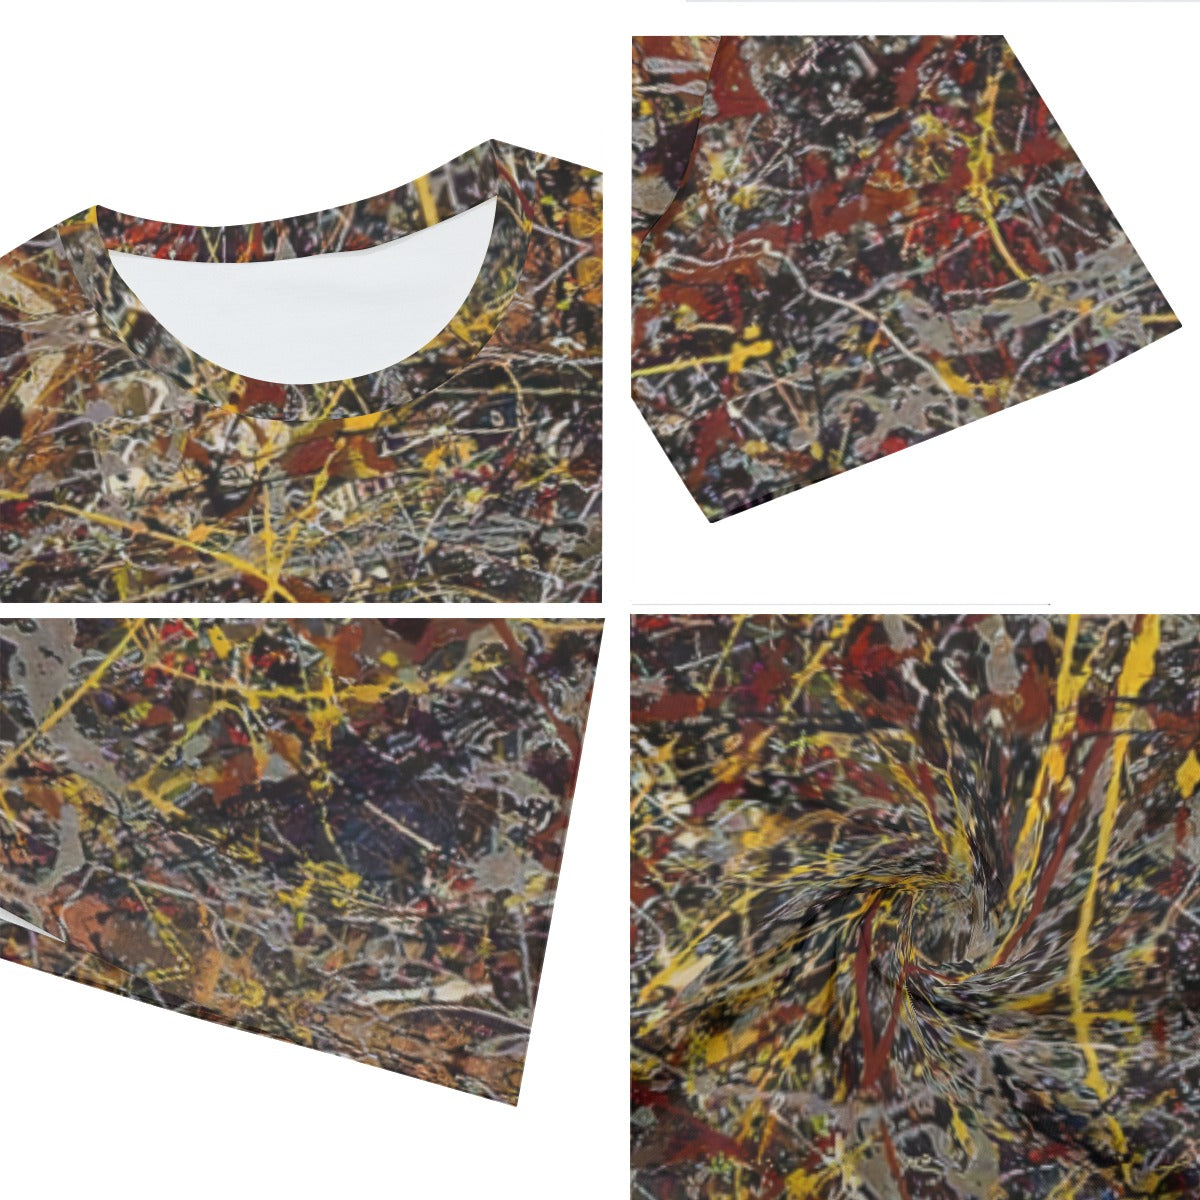 No 5 1948 by Jackson Pollock Art T-Shirt